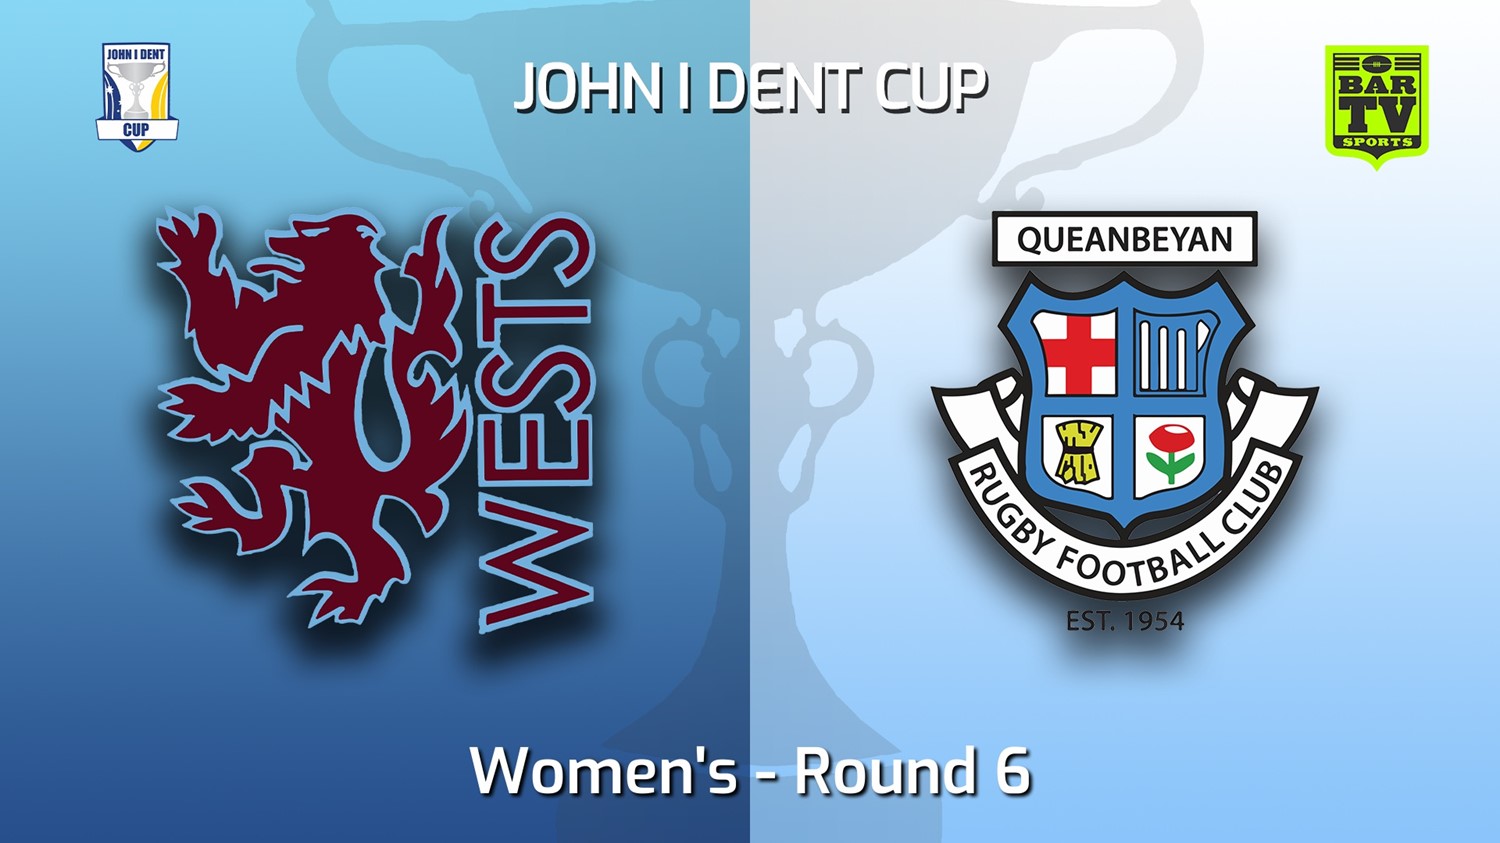 220528-John I Dent (ACT) Round 6 - Women's - Wests Lions v Queanbeyan Whites Slate Image